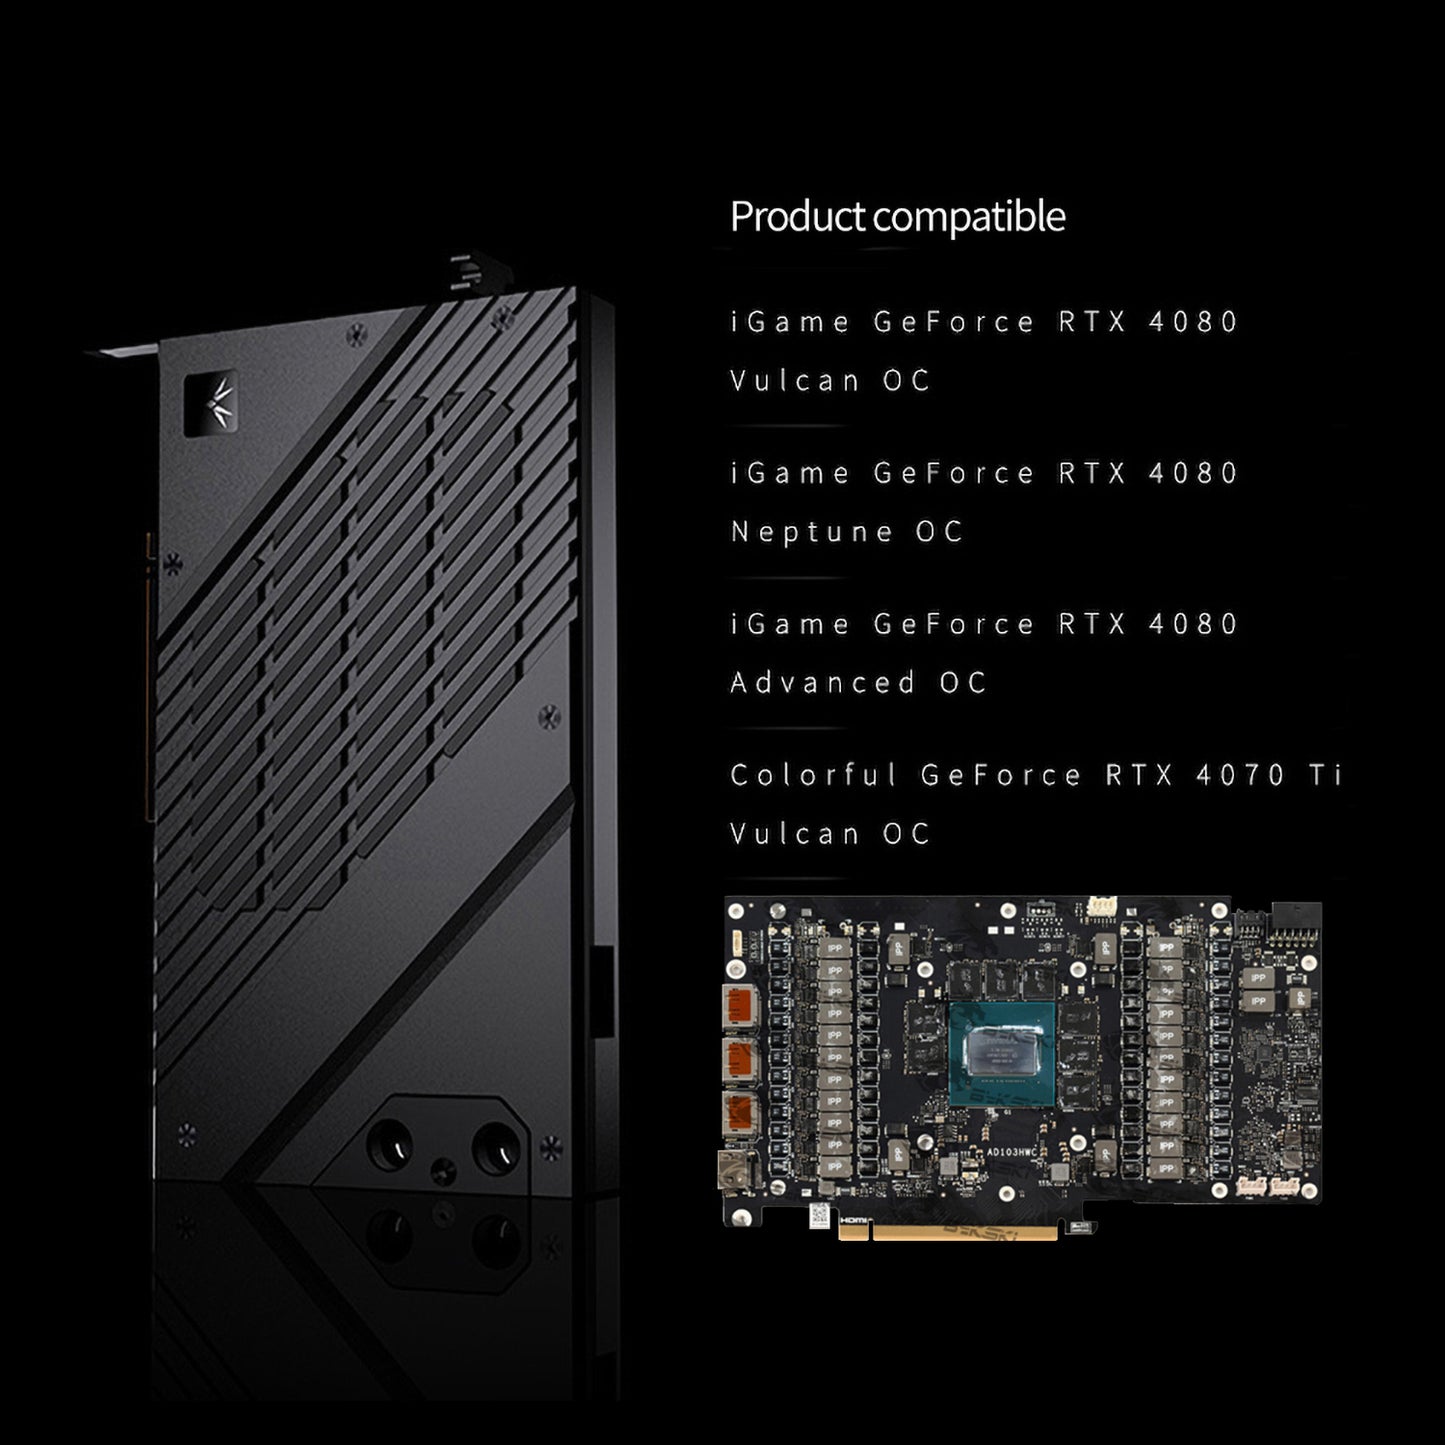 Granzon Full Armor GPU Block For Gigabyte RTX 4090 Windforce / Aorus Xtreme Windforce 24G, Bykski Premium Sub-Brand High Quality Series GPU Water Cooling Cooler, GBN-IG4080VXOC